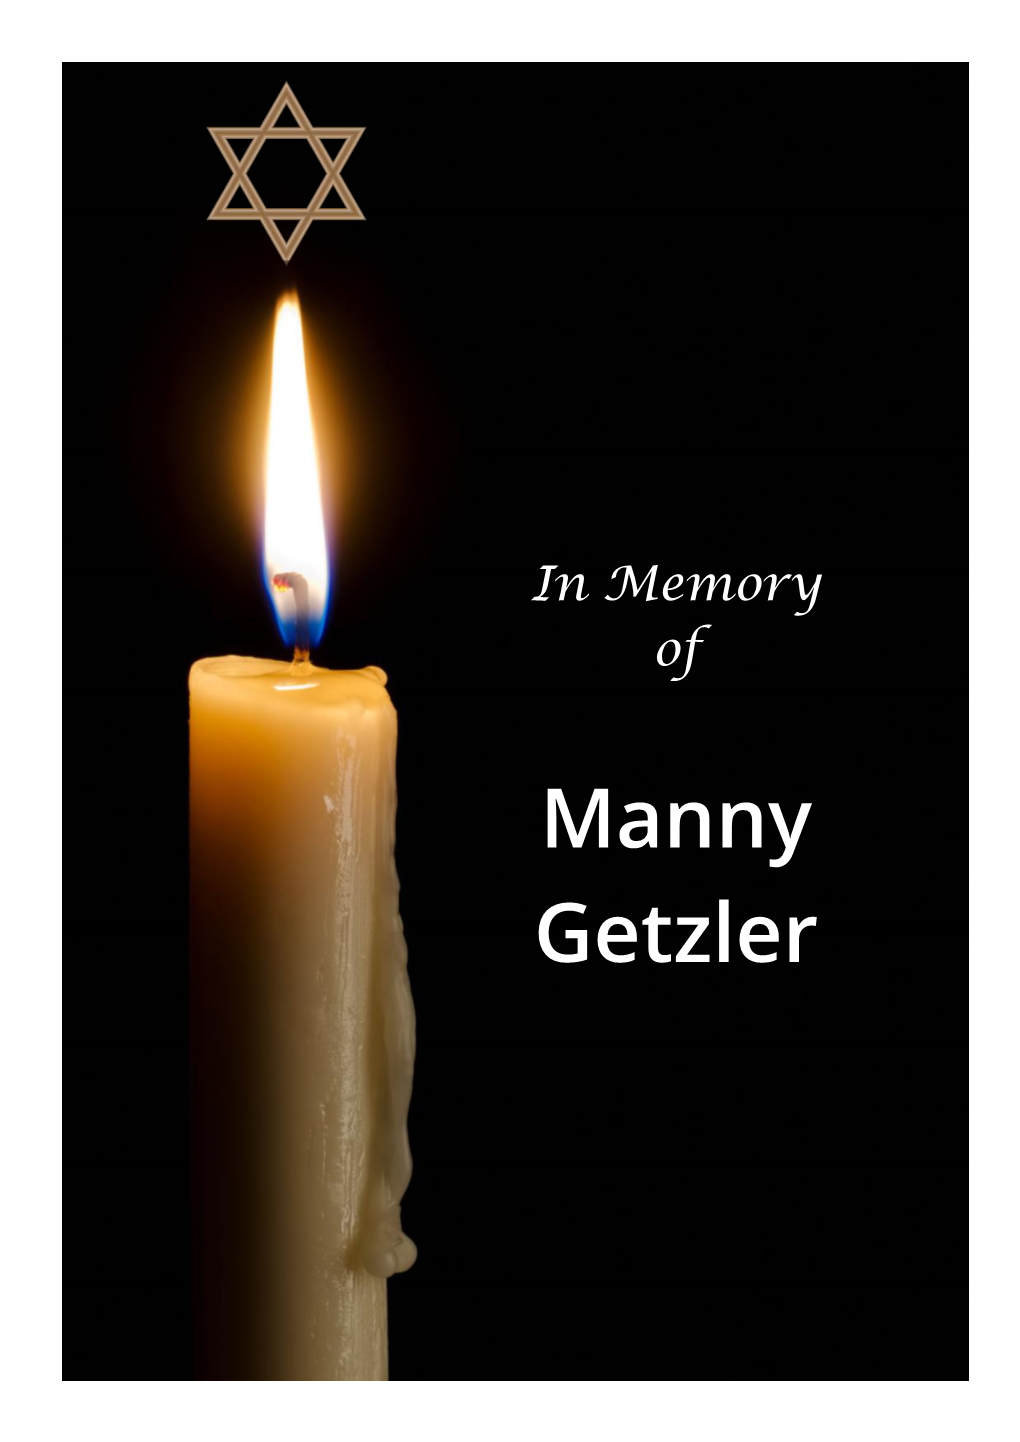 Manny Getzler in MEMORY of MANNY GETZLER